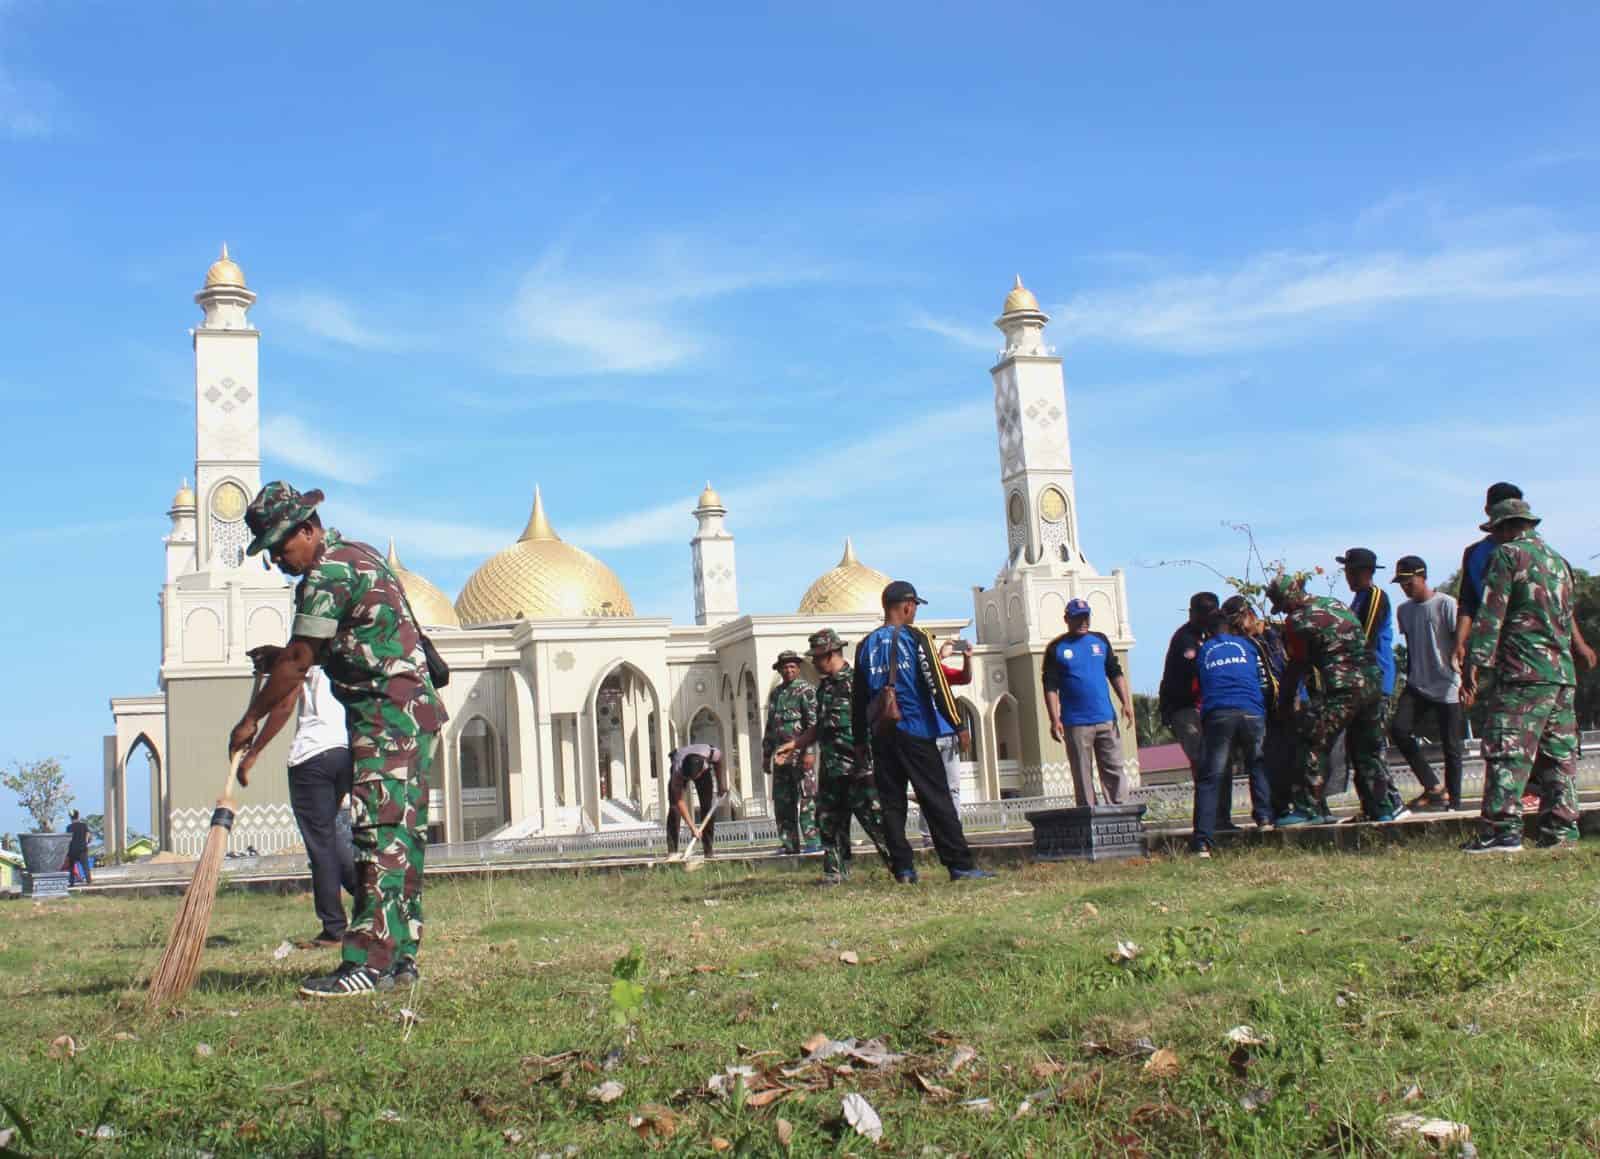 Jelang Ramadhan, TNI dan Komponen Masyarakat di Abdya Gotong Royong Bersihkan Masjid